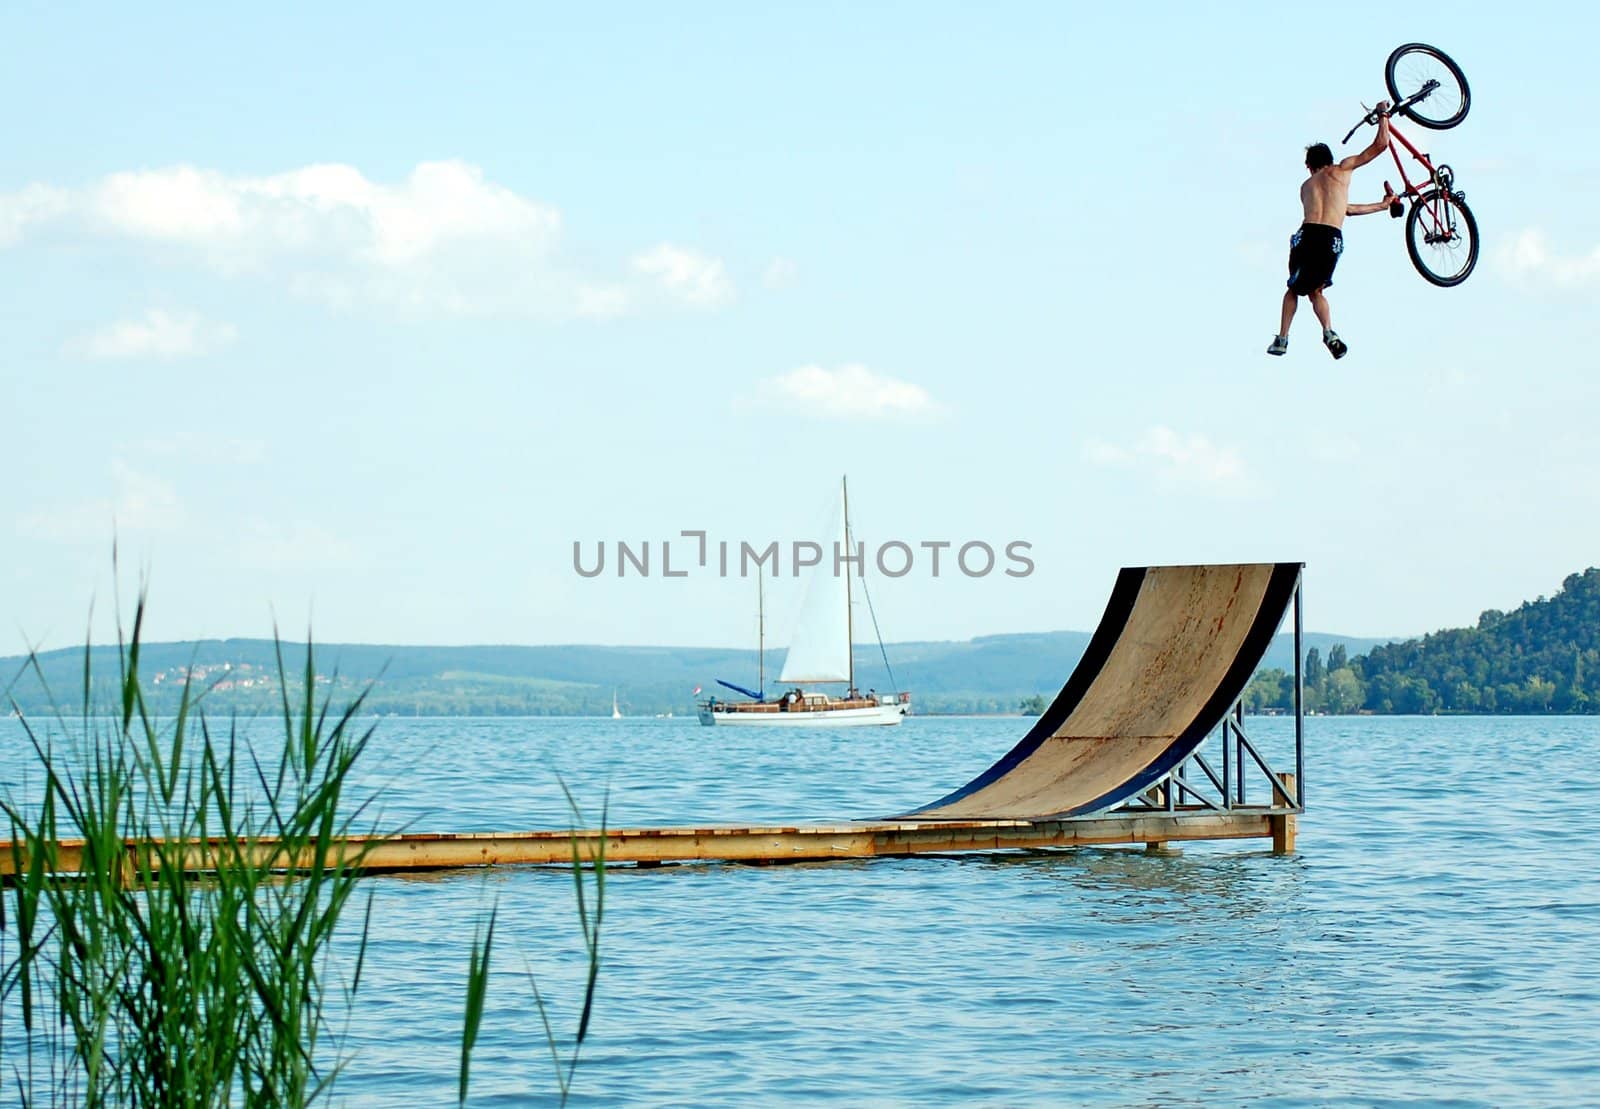 Bike-jump competition at The Lake Balaton.